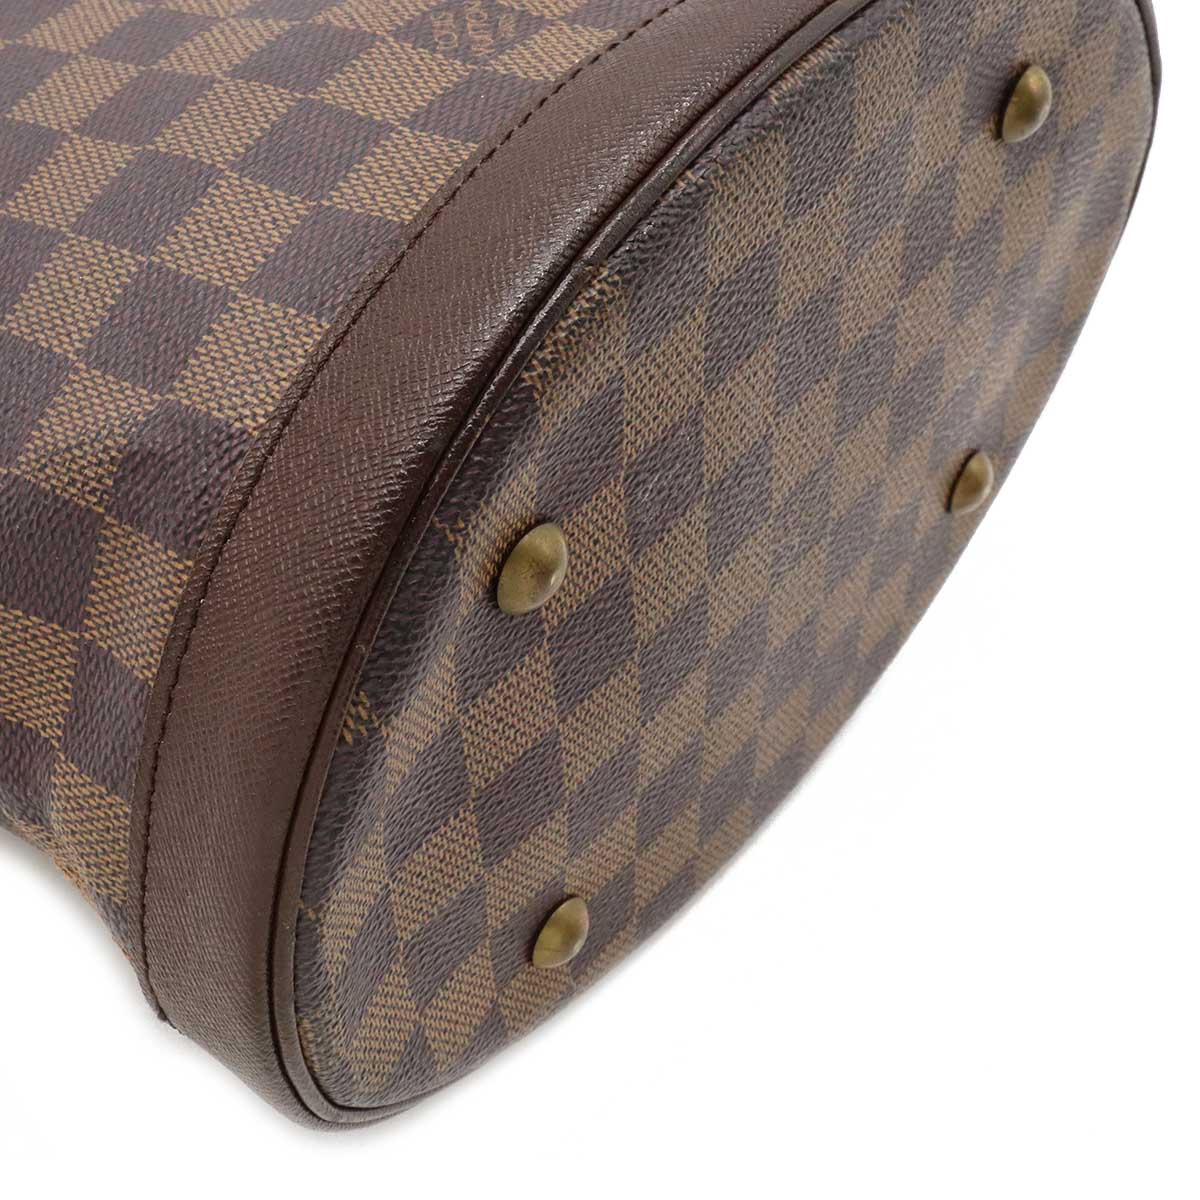 Louis Vuitton Damier Marais Bucket-shaped Shoulder Bag N42240